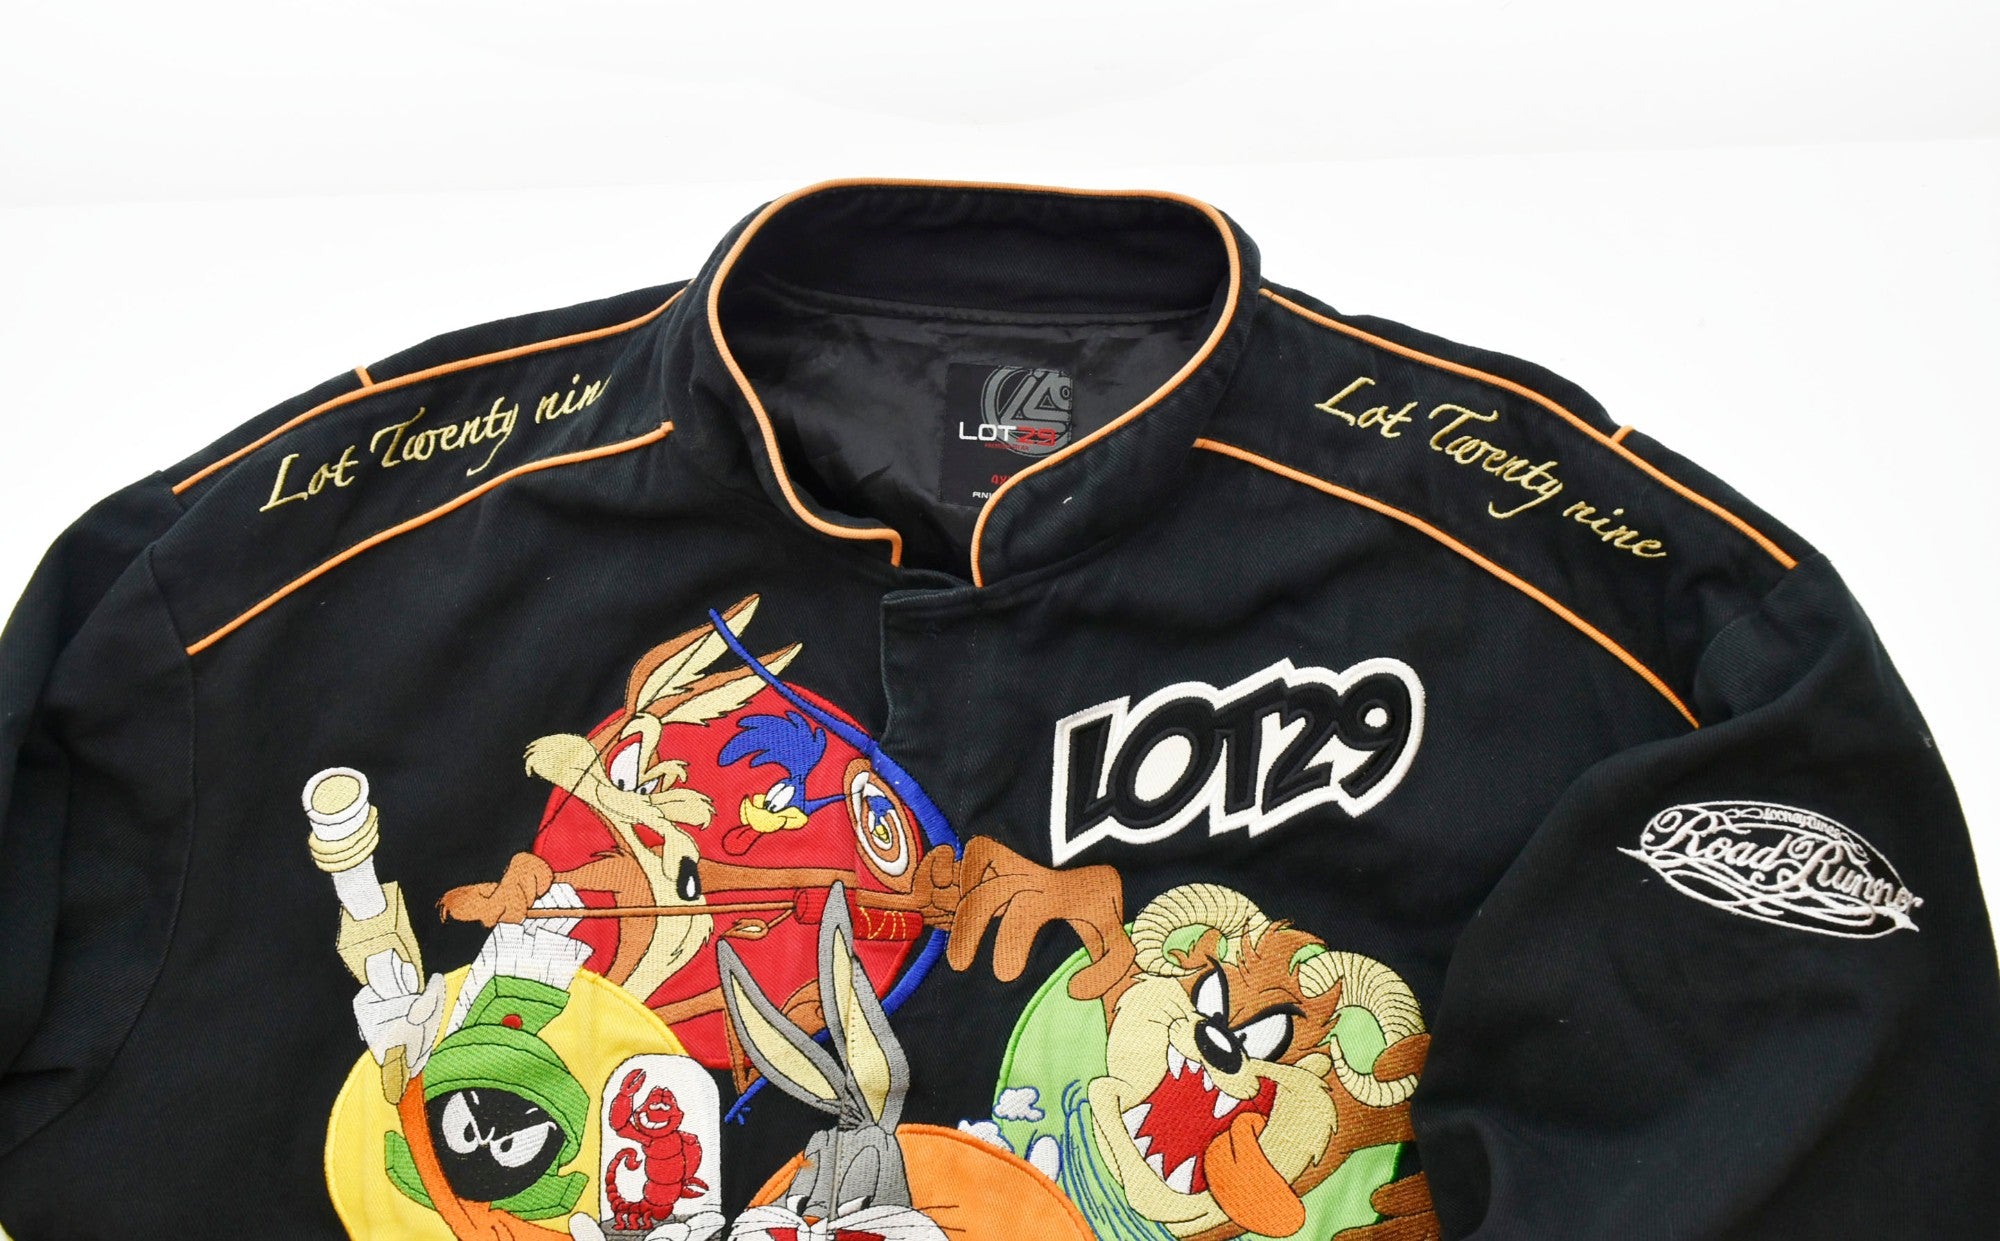 LOT29 レーシングジャケット　Racing jacket不躾な質問なのですが